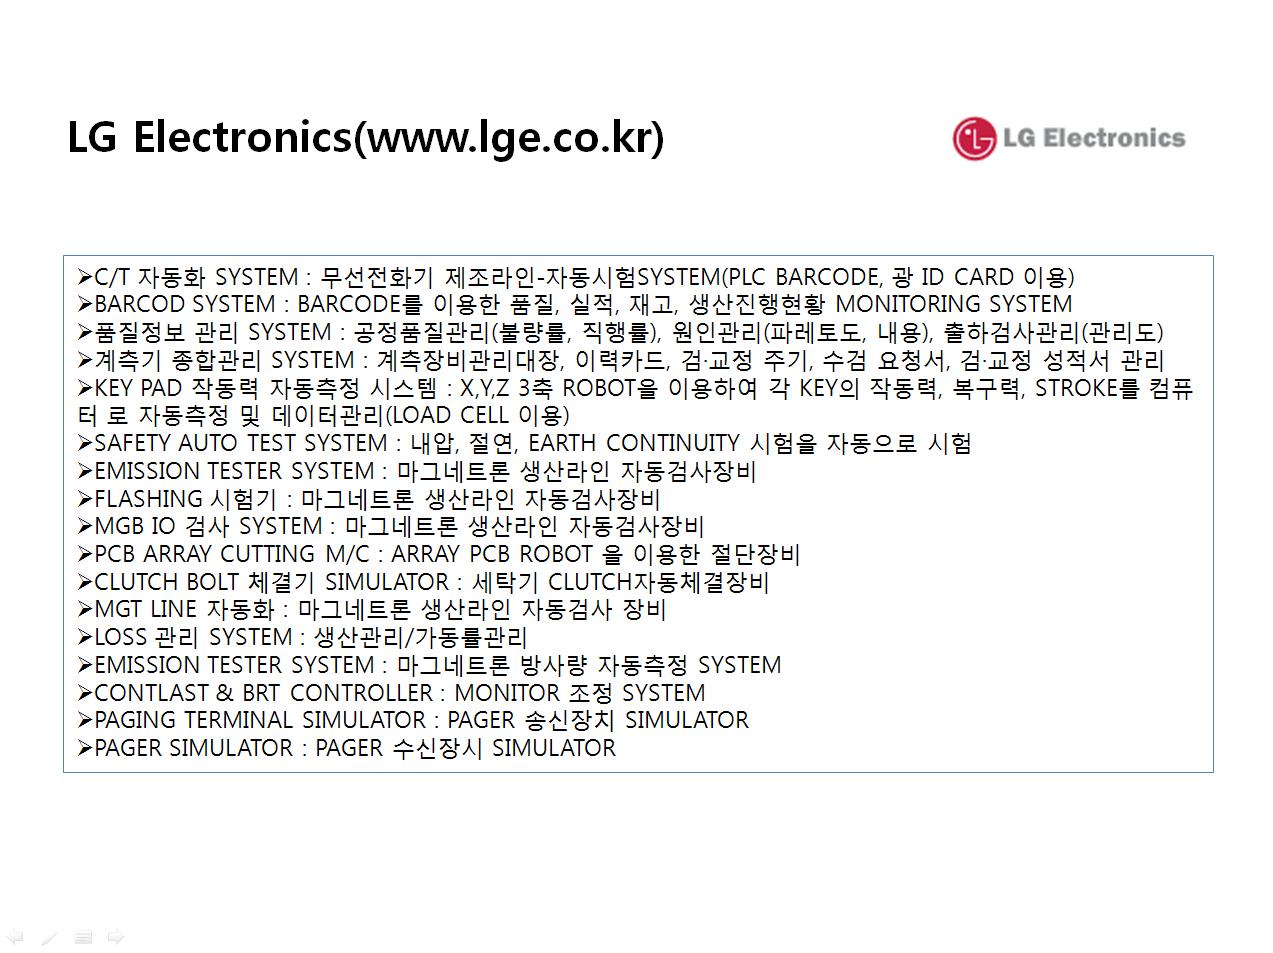 LG Electronics.JPG